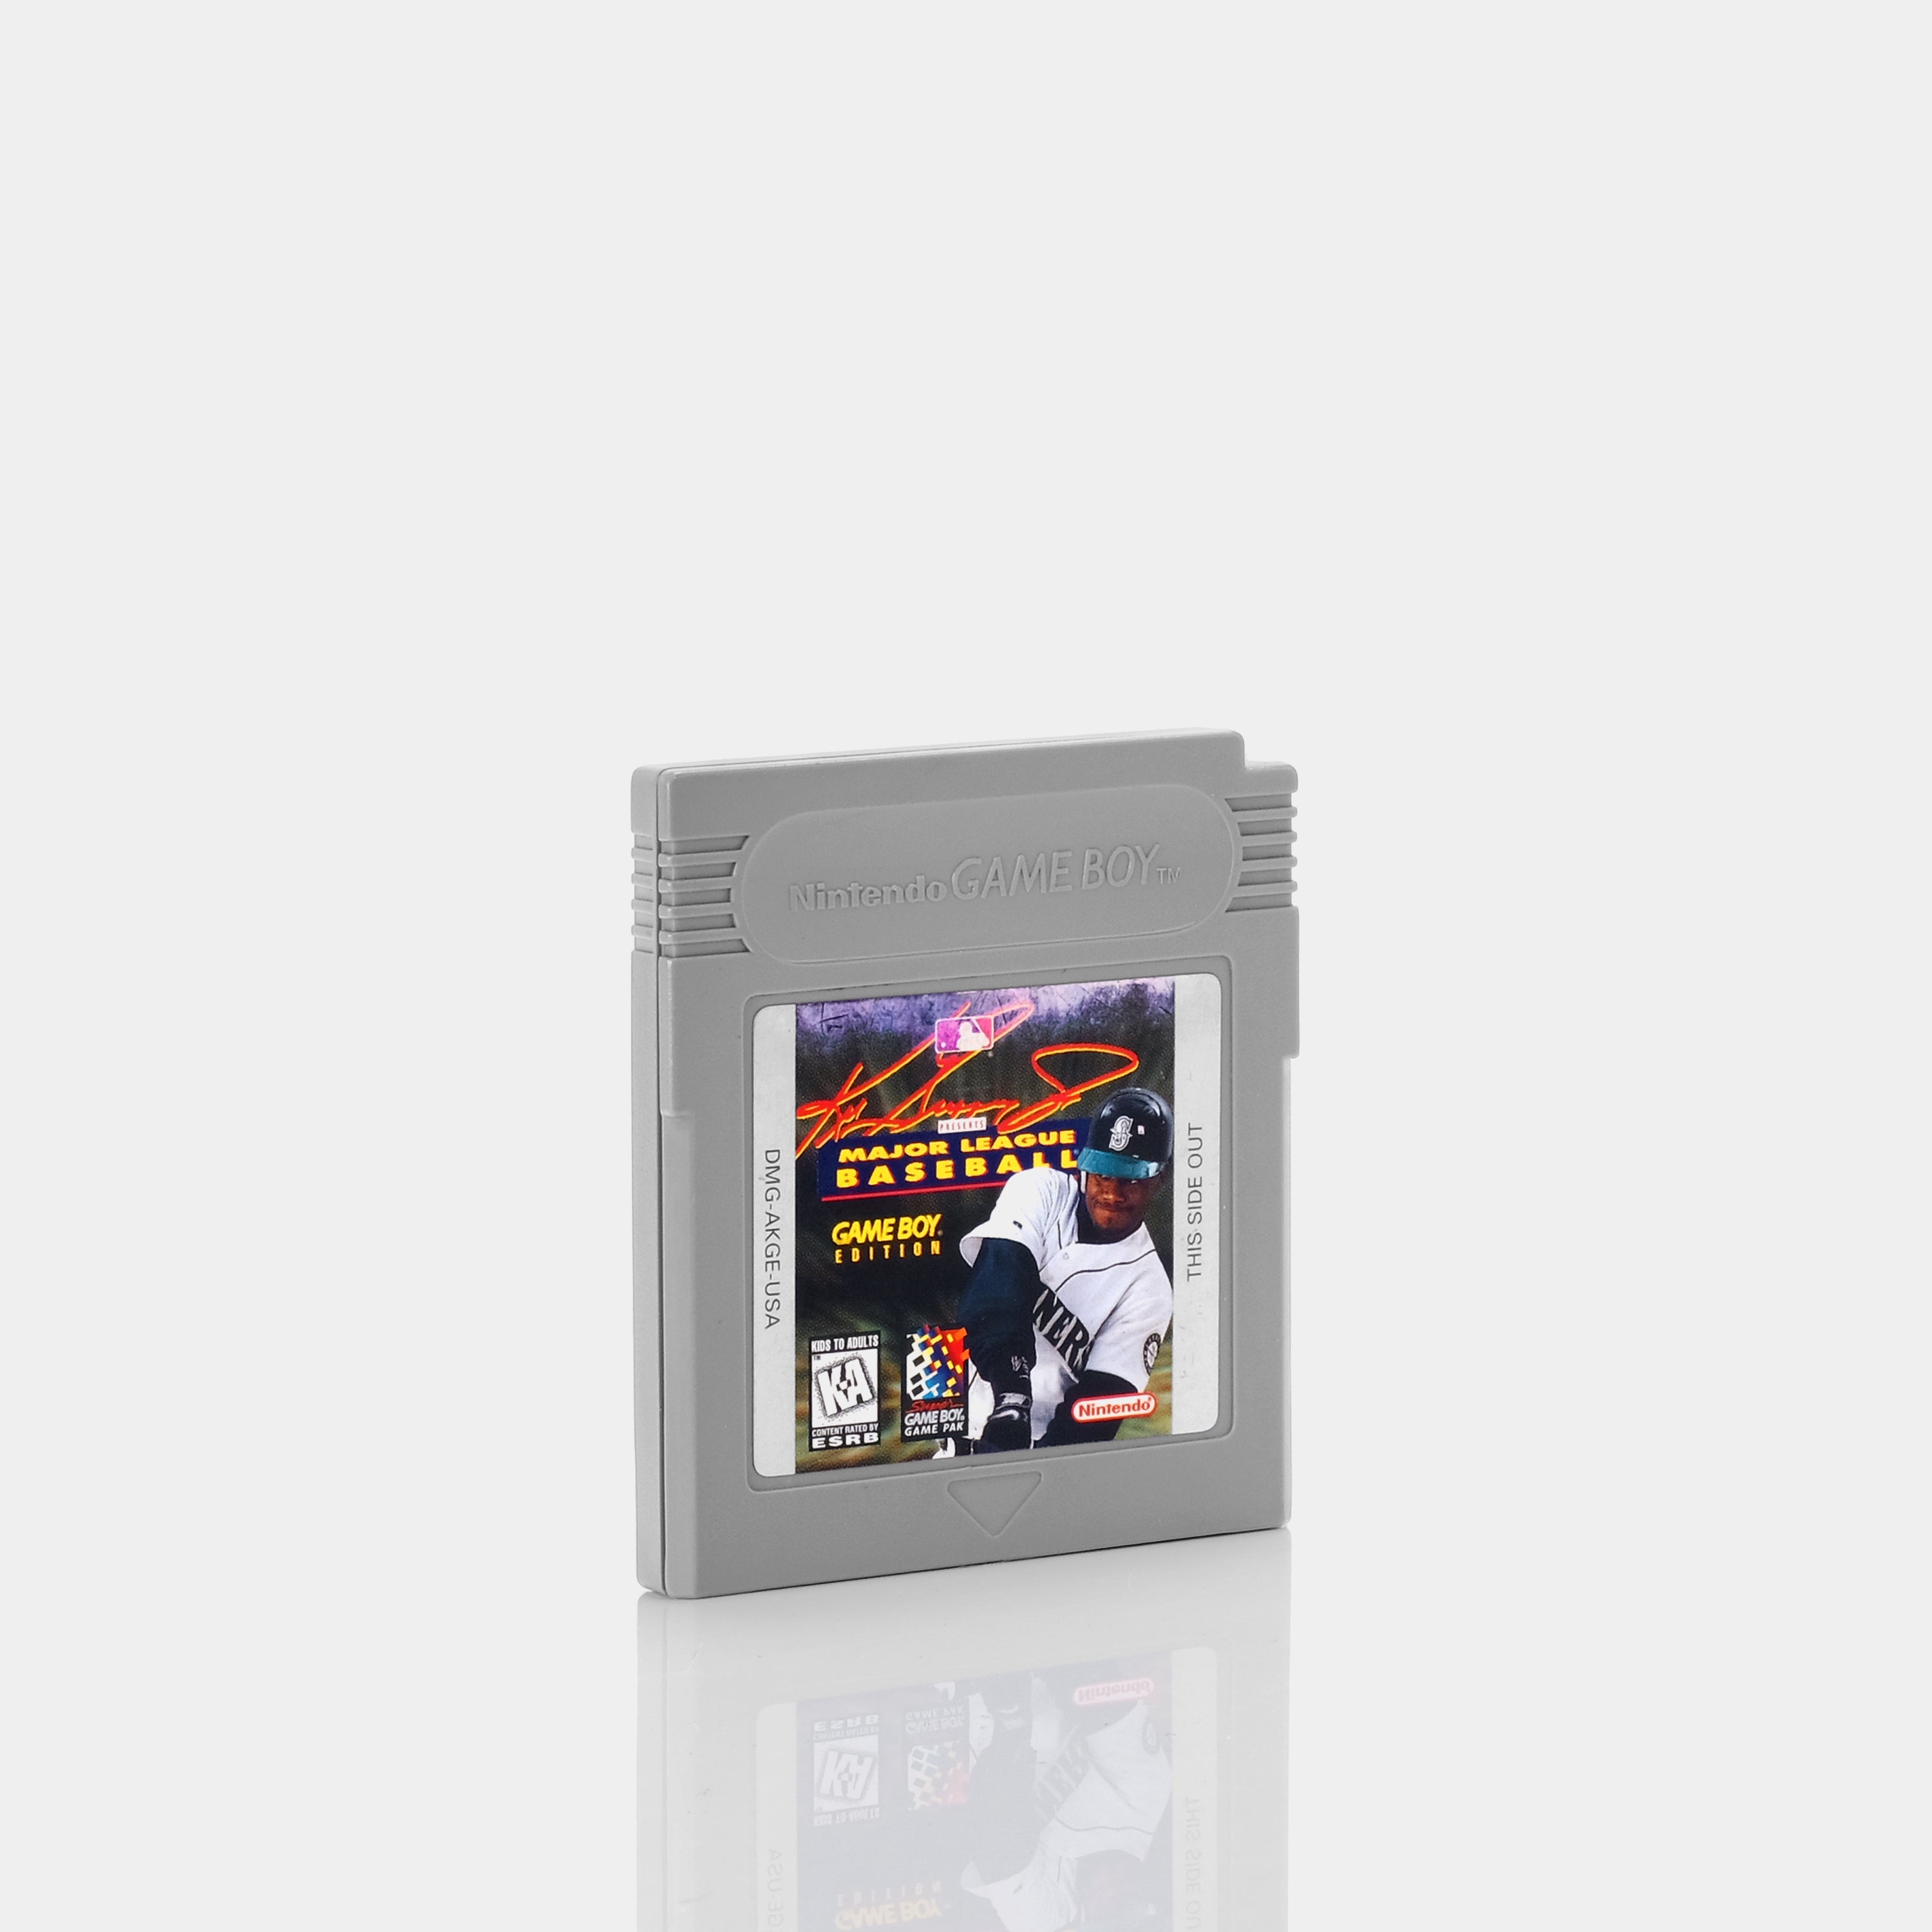 Ken Griffey Jr. Presents Major League Baseball Game Boy Game